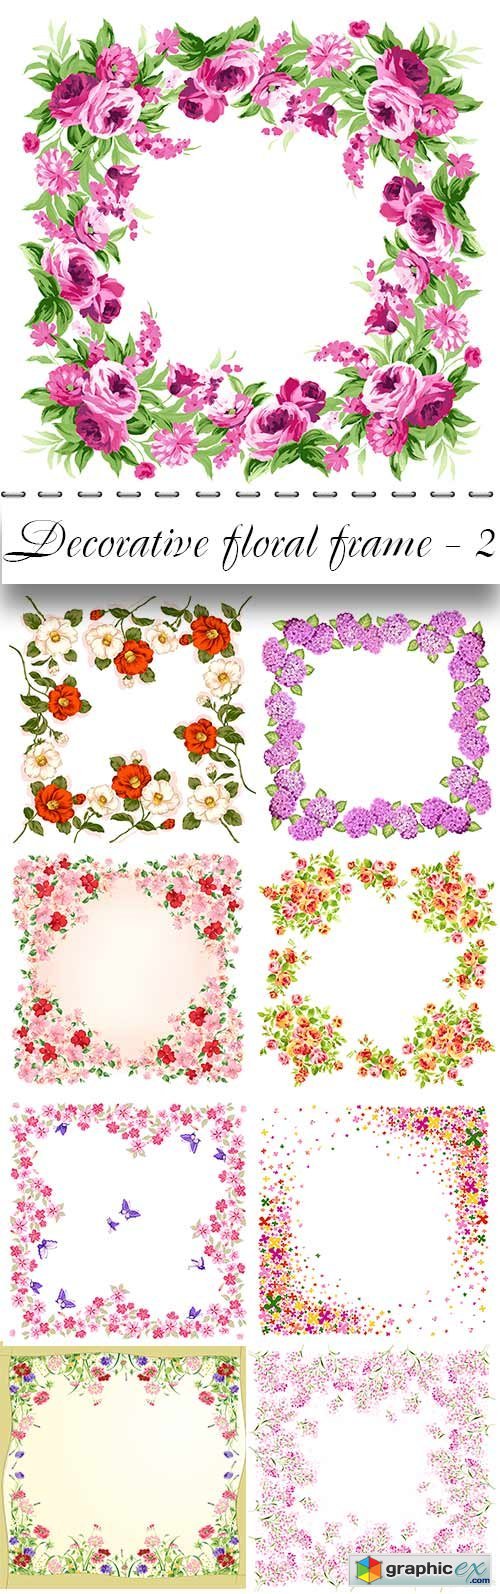 Decorative floral frame PSD - 2